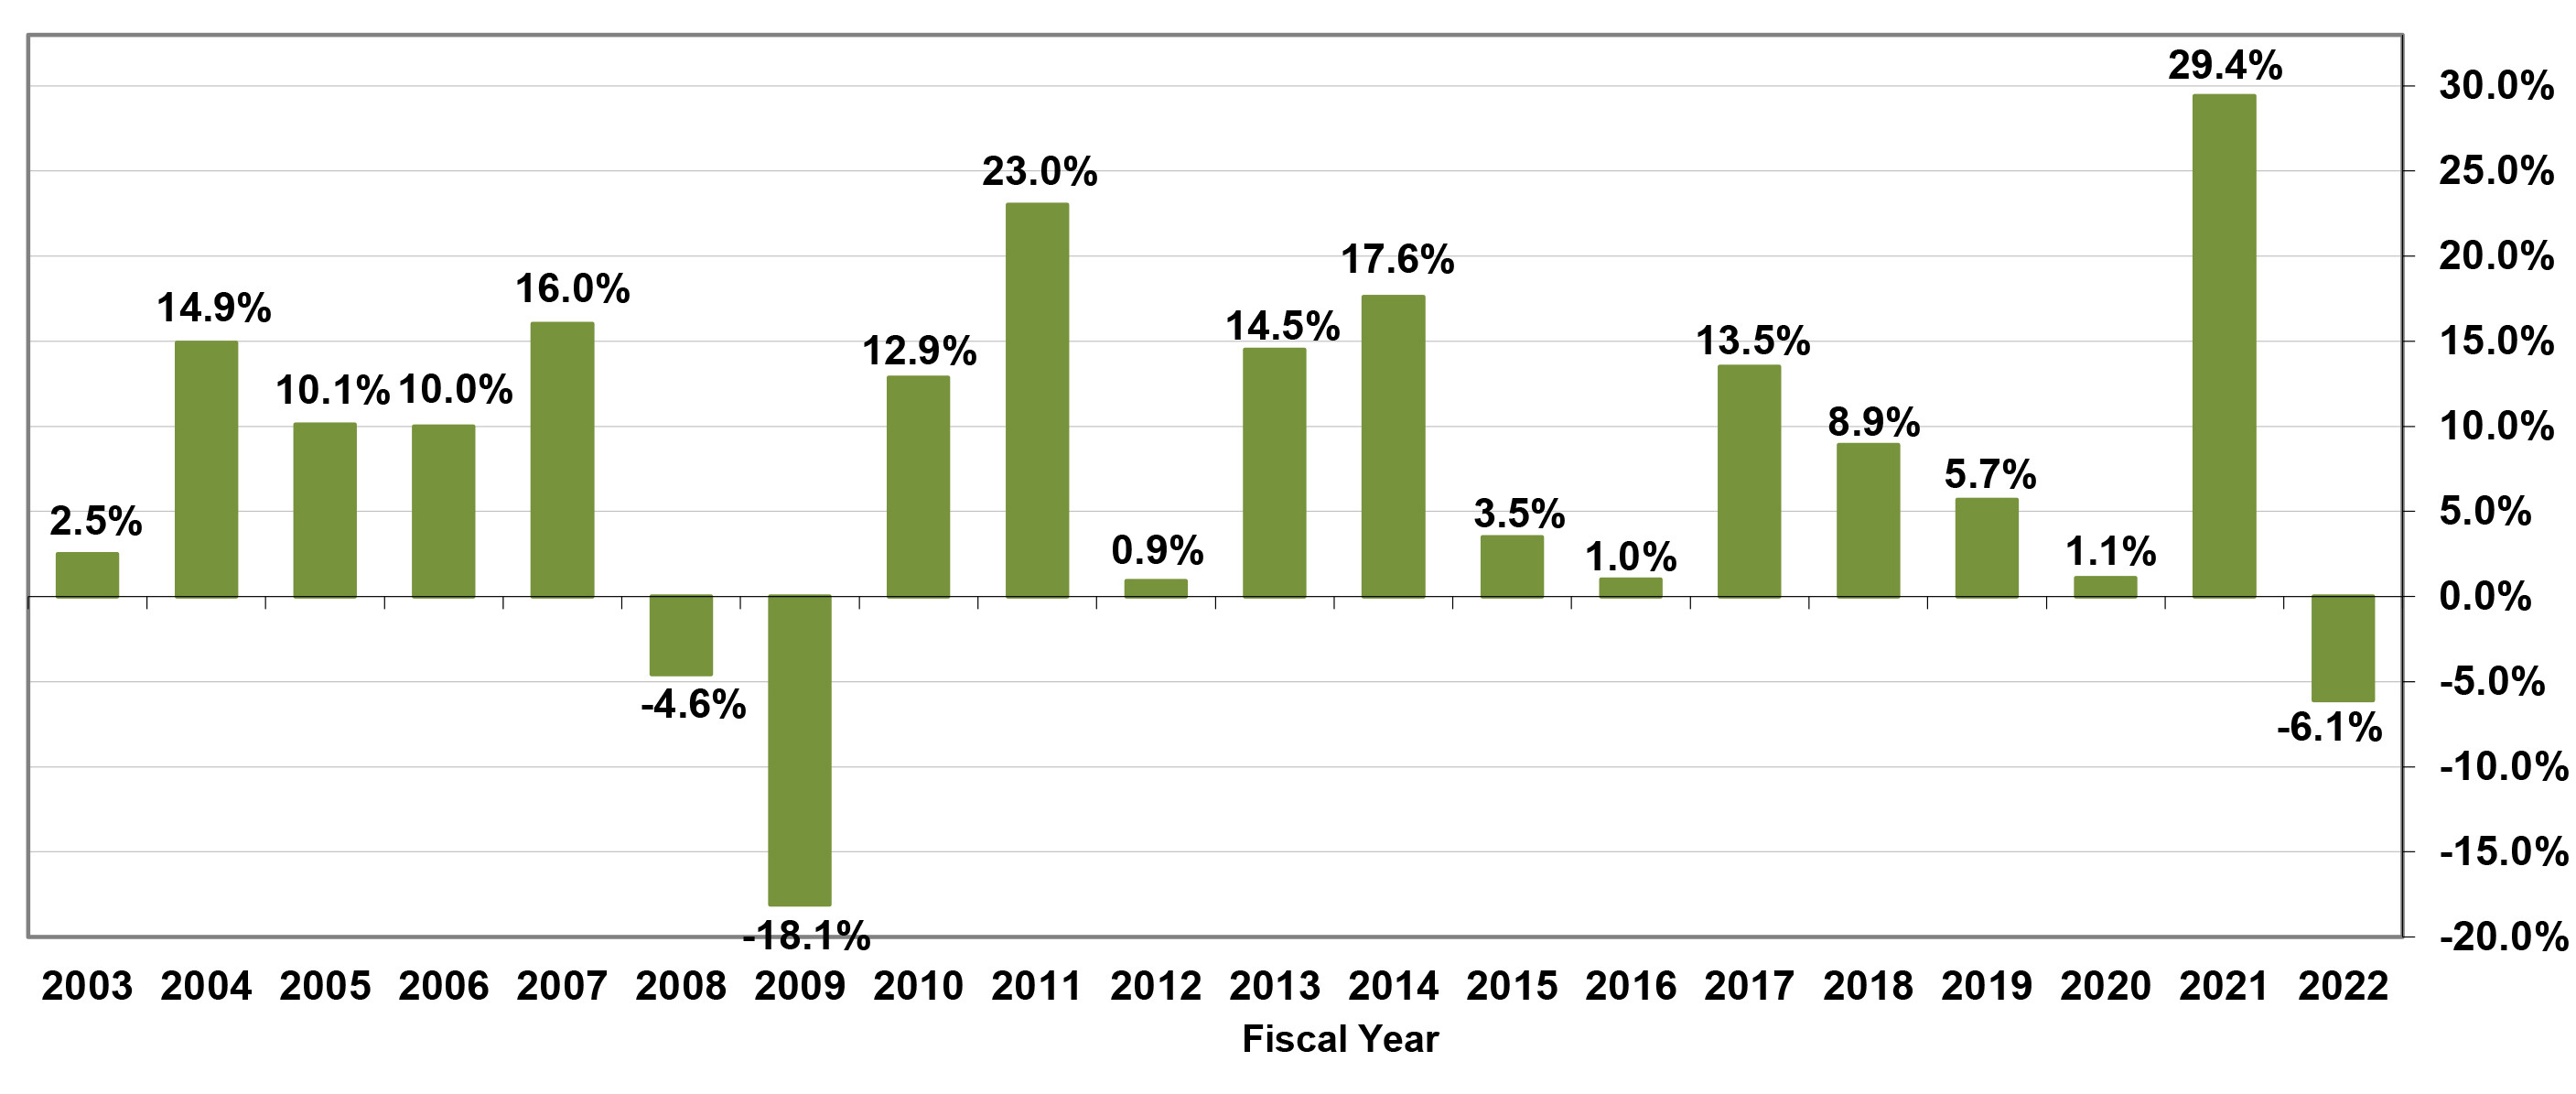 20-Year Net of Fees Total Fund Return Bar Chart 2002-2021